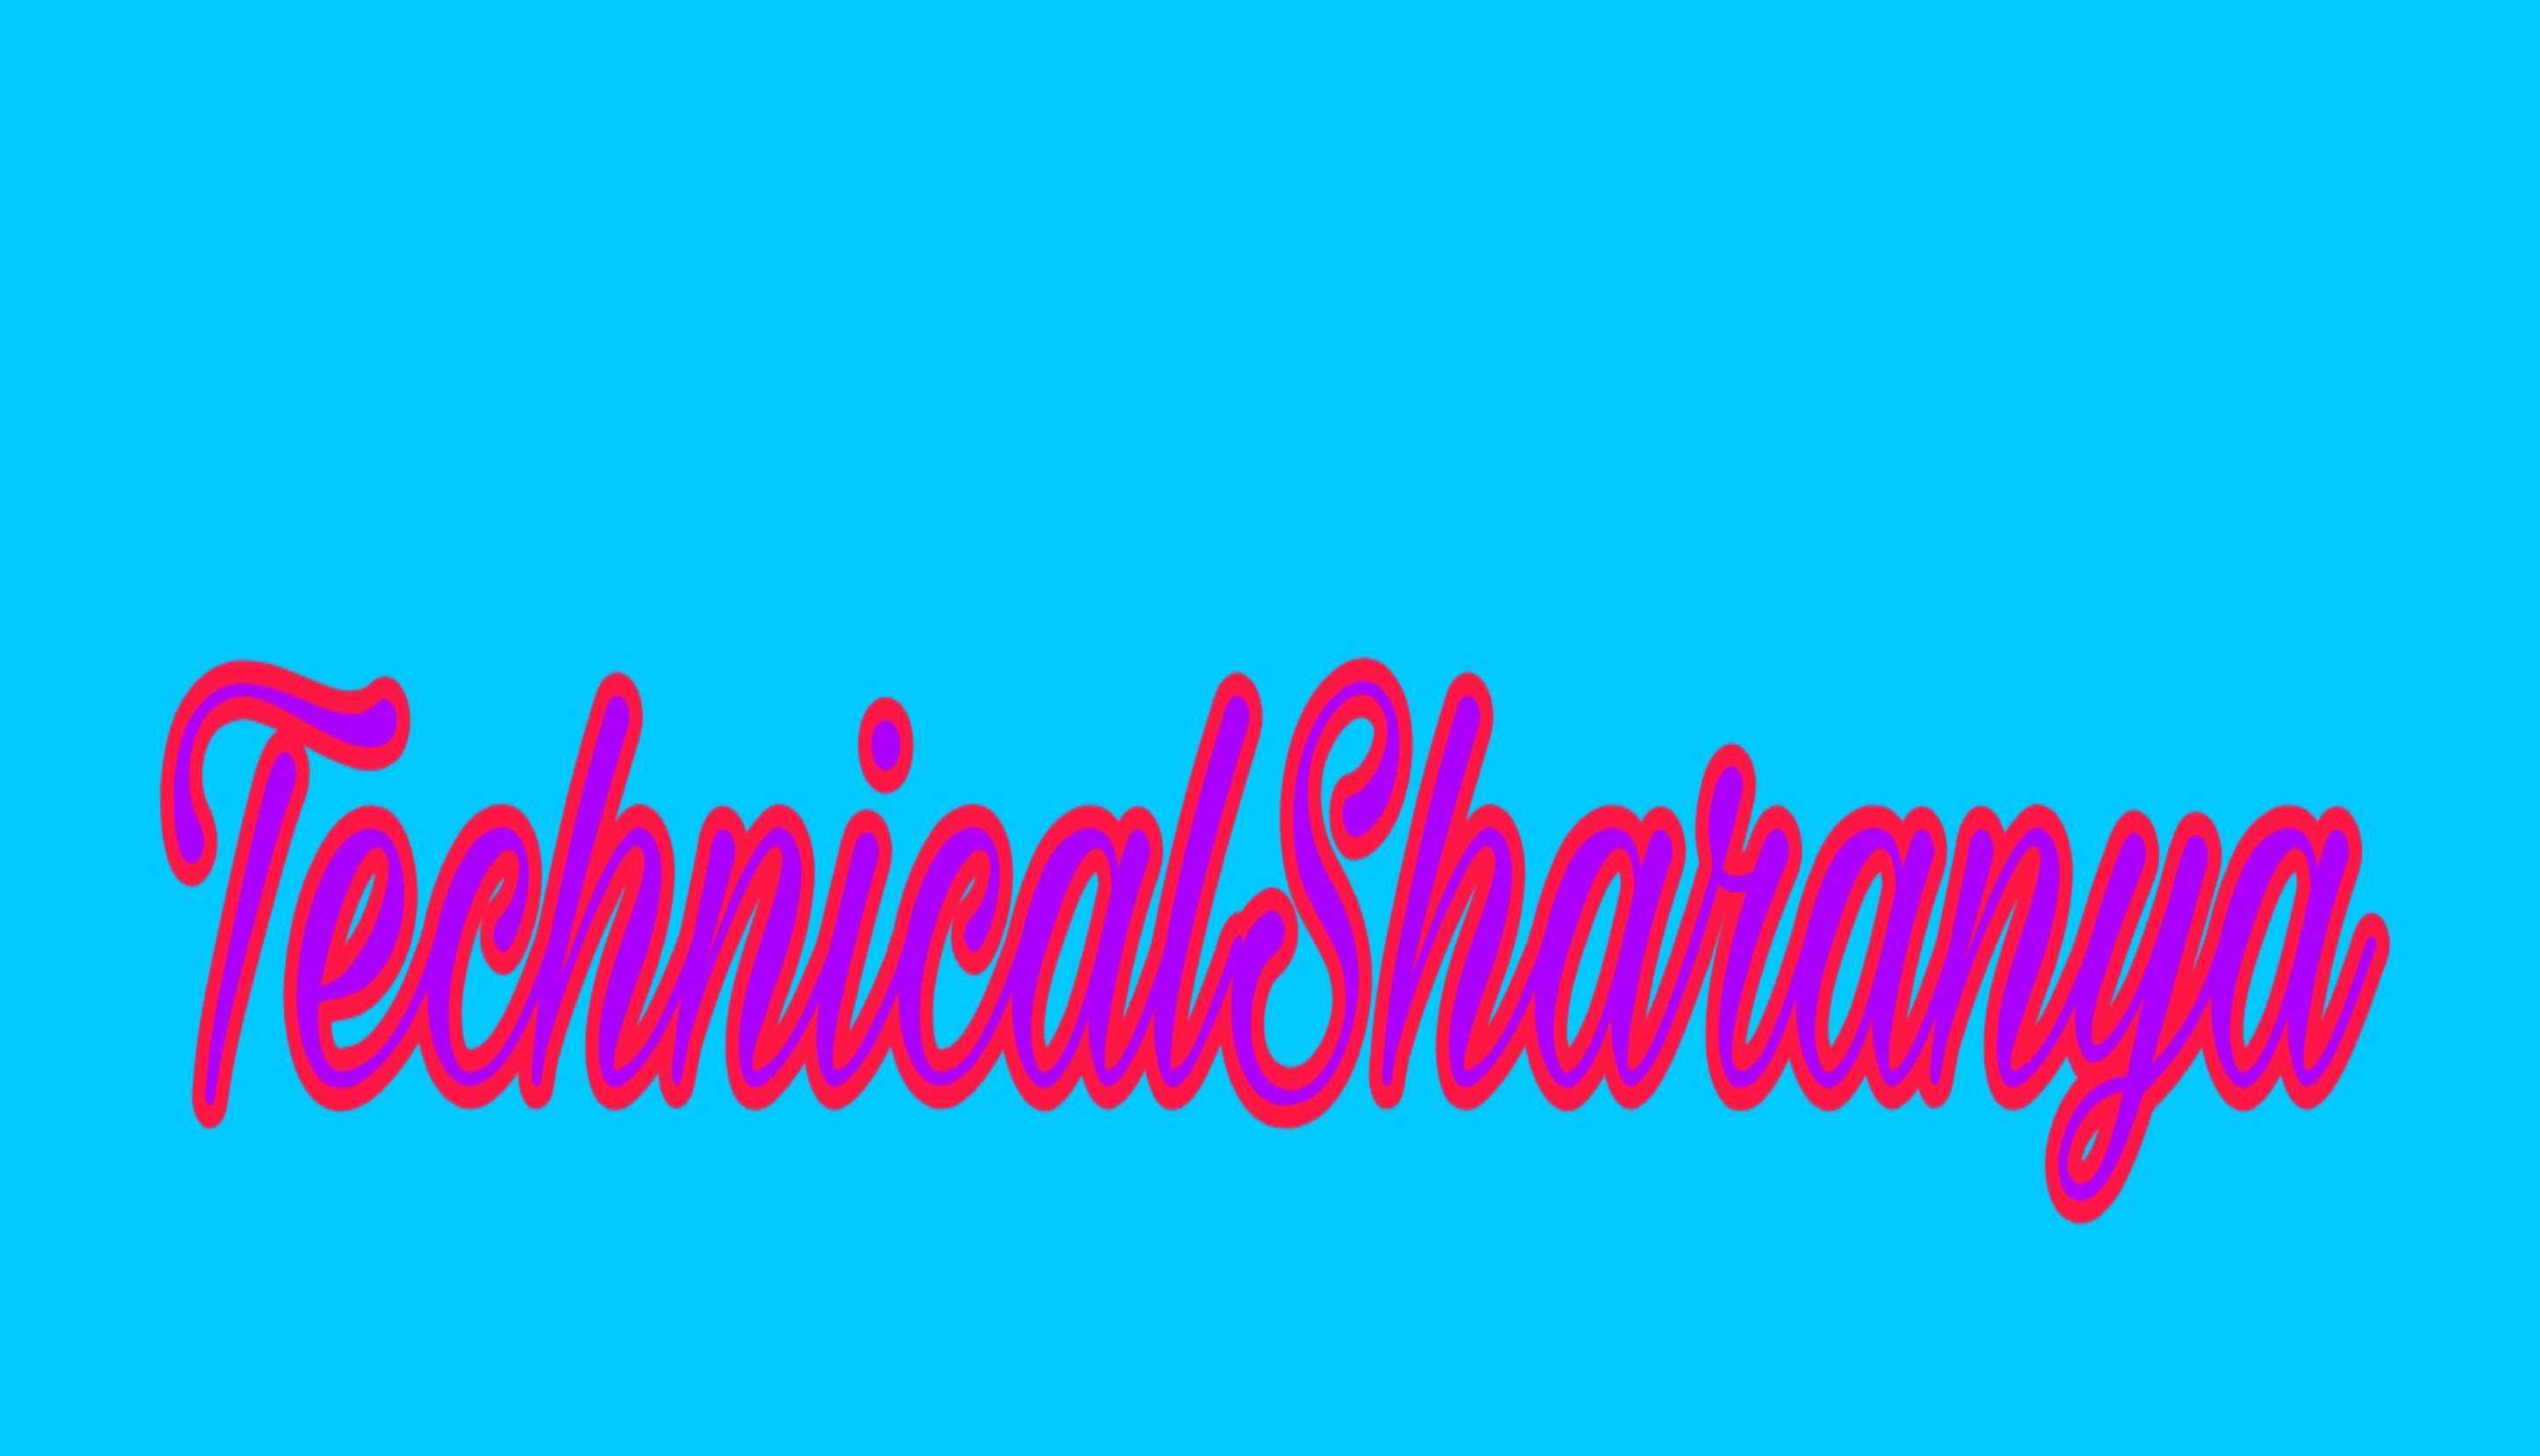 Technical Sharanya